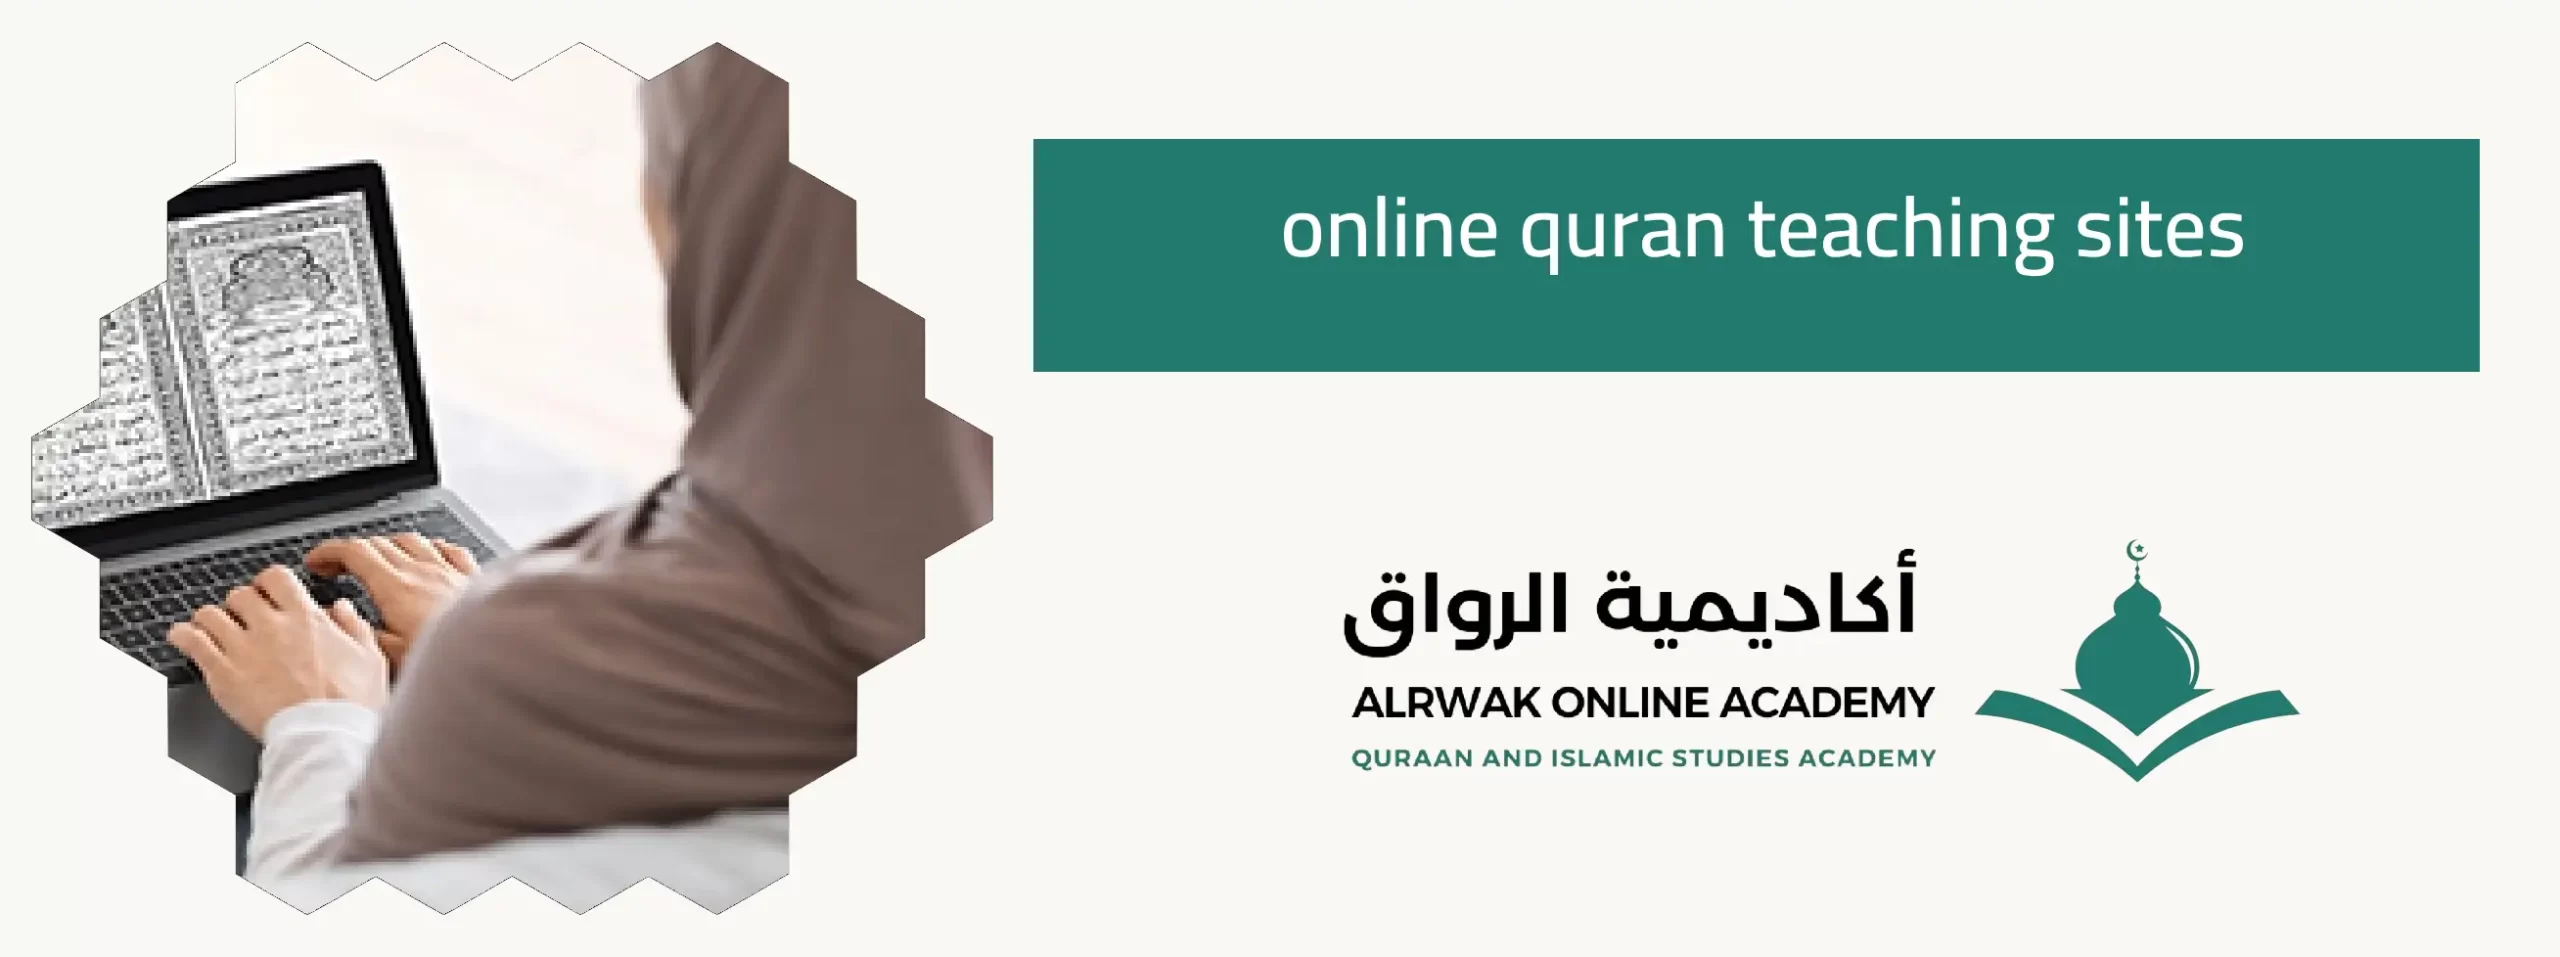 online quran teaching sites